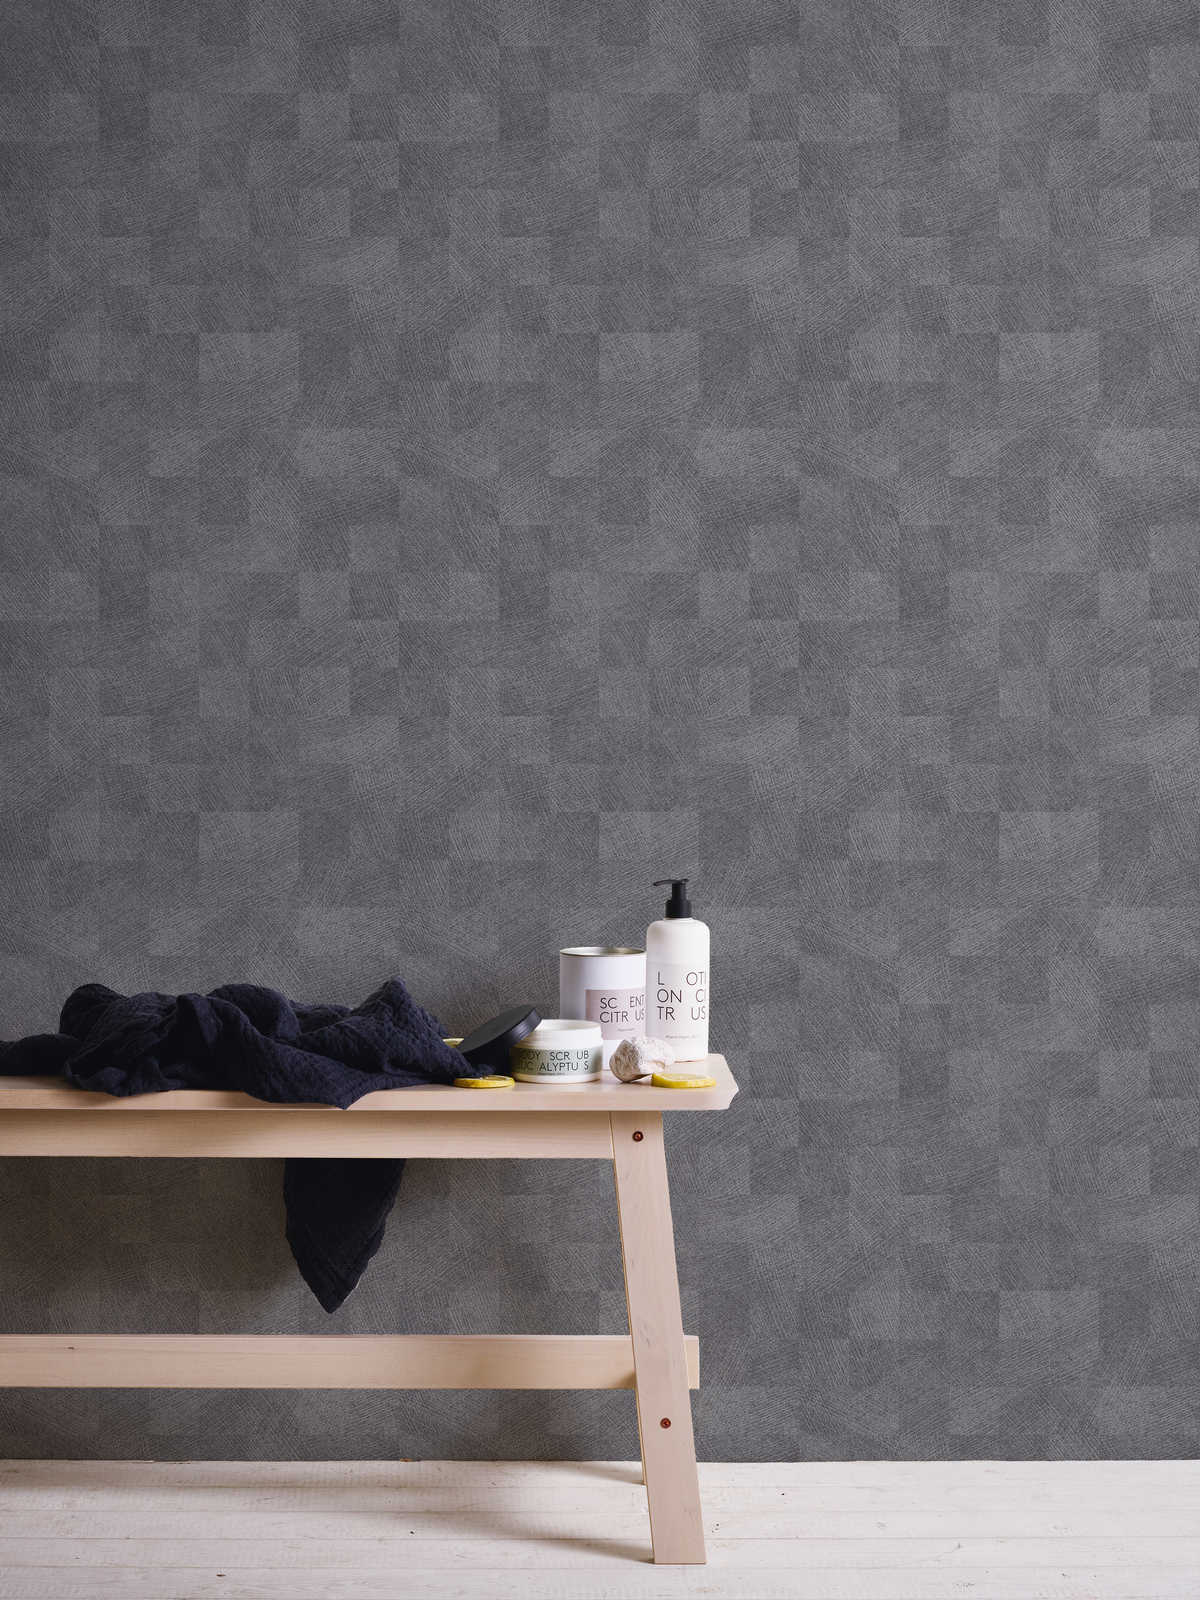             Metallic wallpaper dark grey check pattern with gloss effect - grey, metallic
        